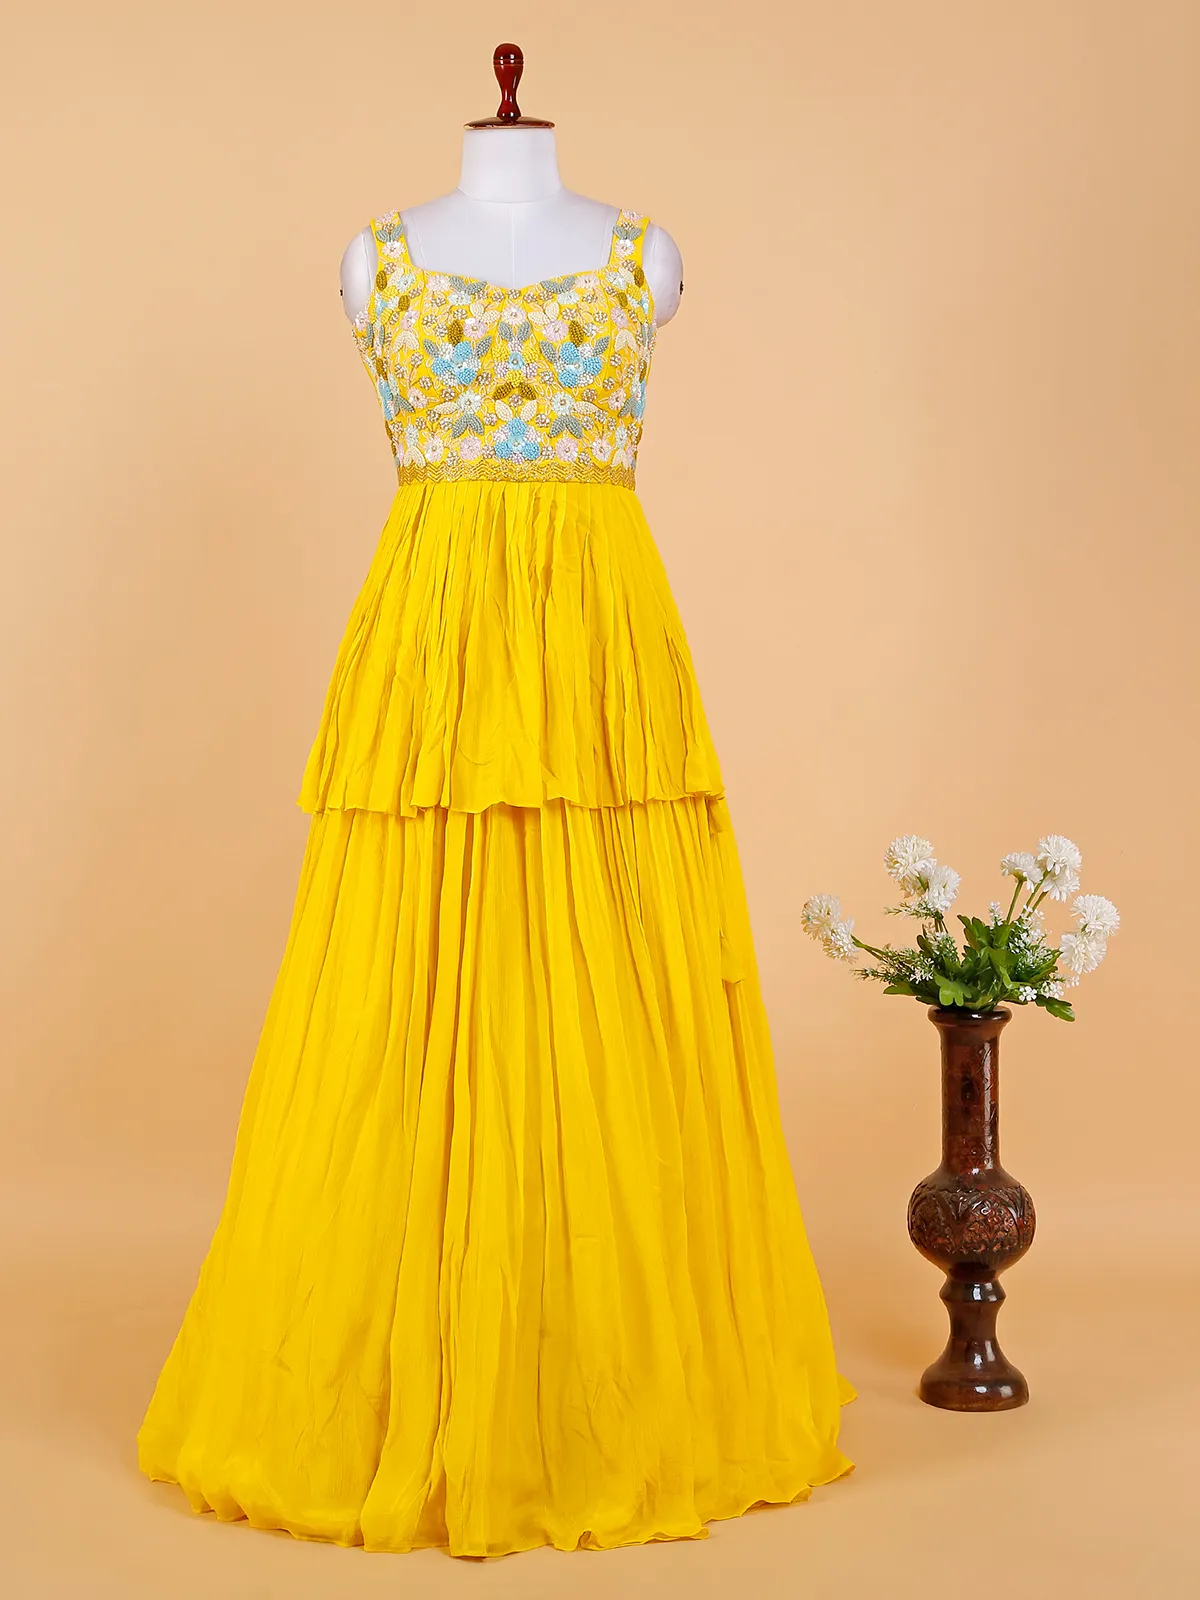 Trendy yellow georgette lehenga choli for wedding